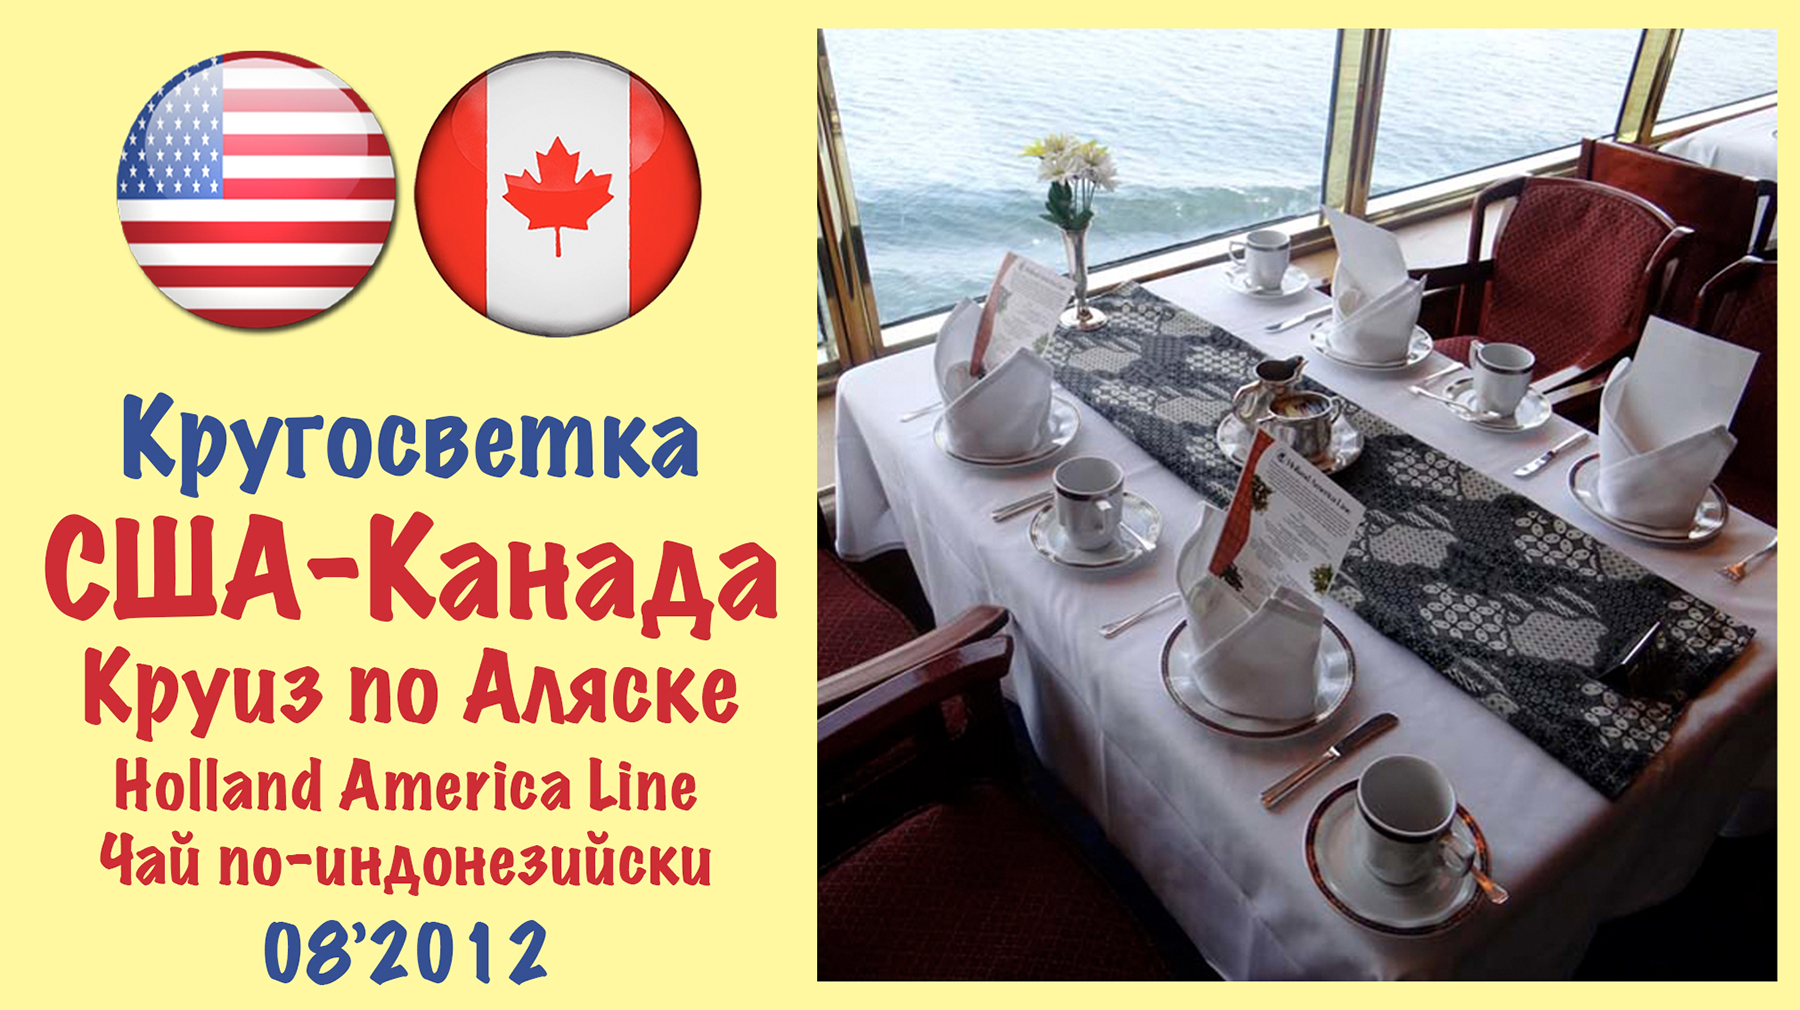 Кругосветка-2012. Круиз по Аляске. Holland America Line. Чай по-индонзийский